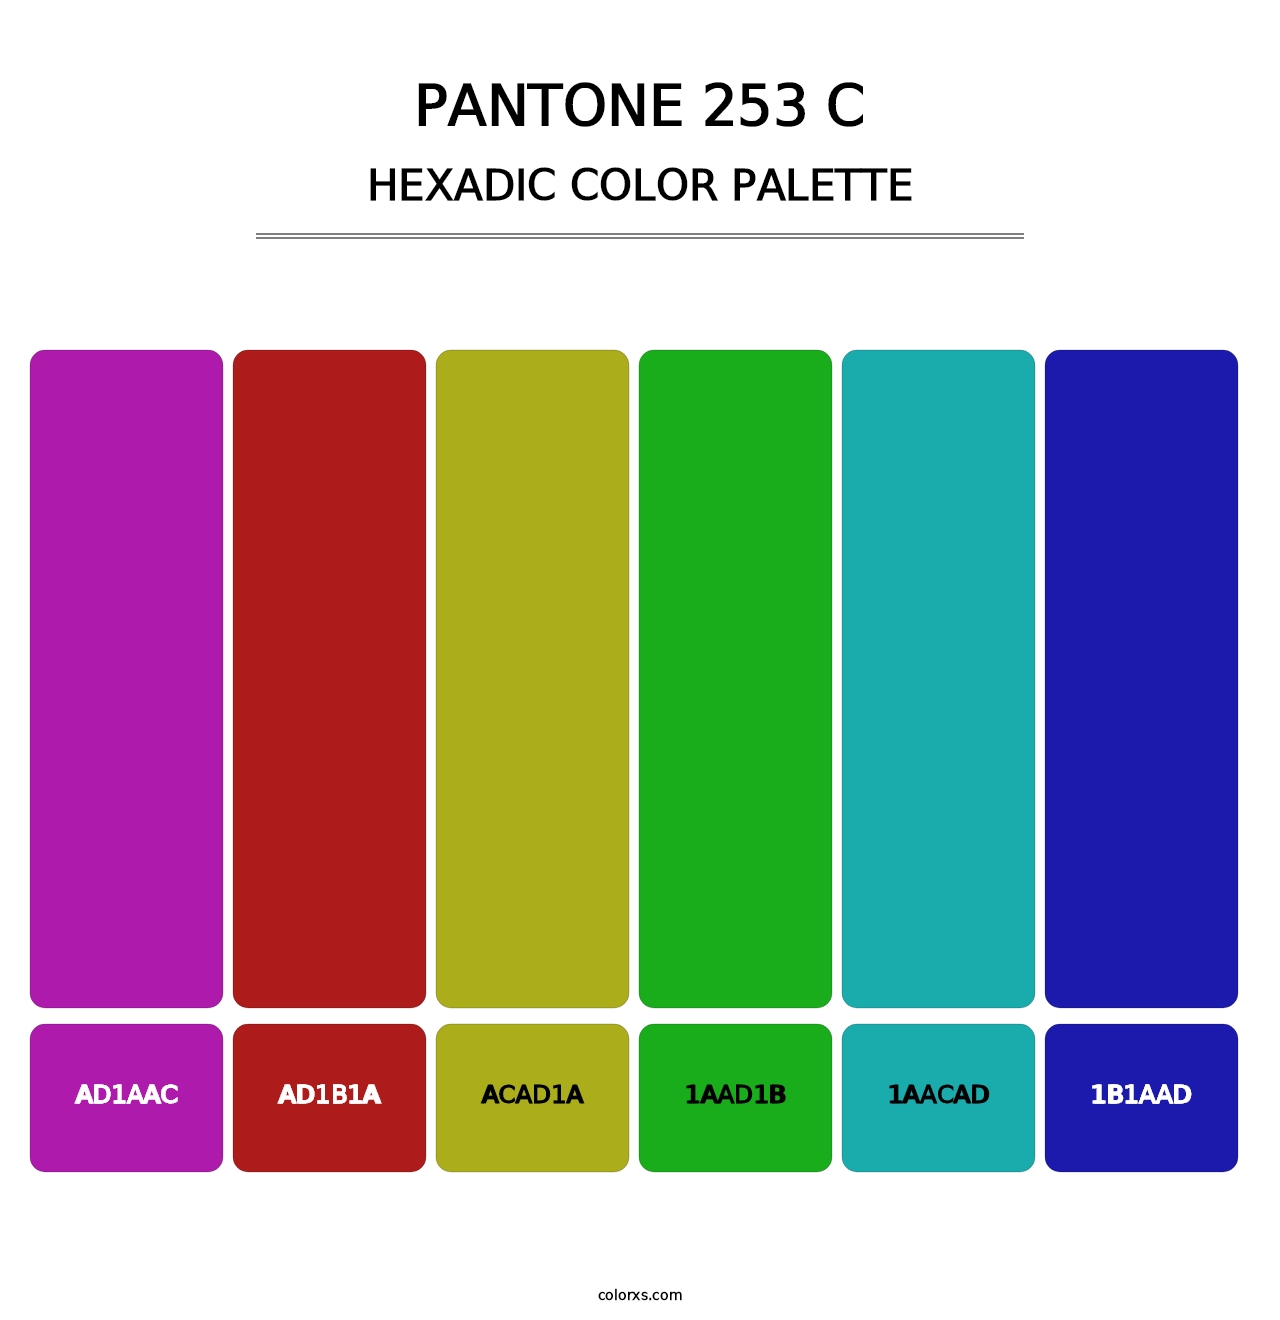 PANTONE 253 C - Hexadic Color Palette